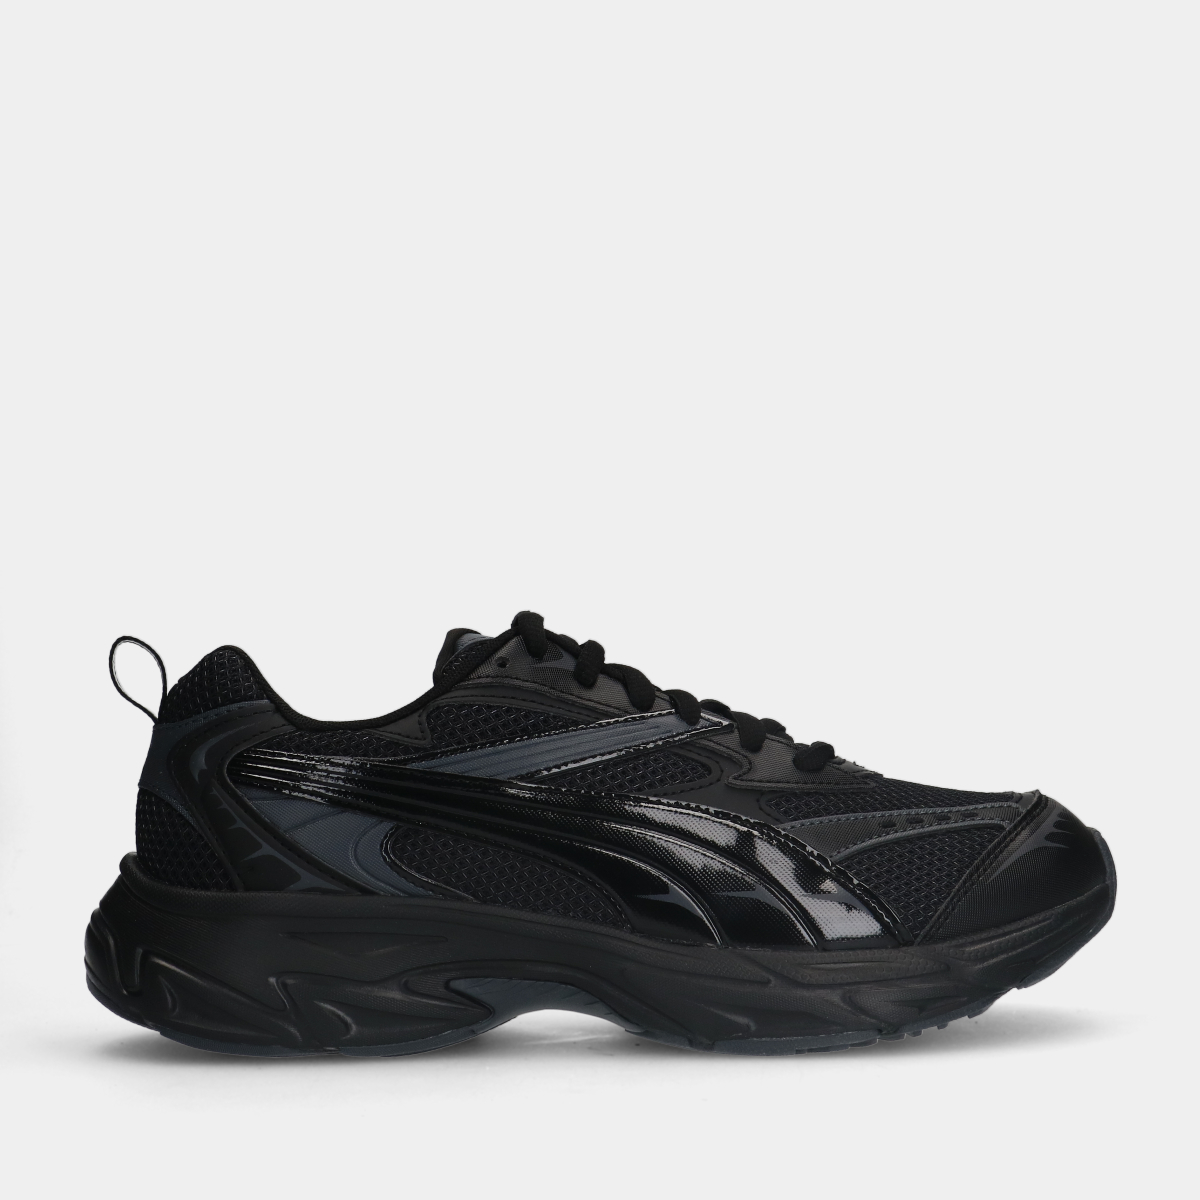 Puma morphic base black sneakers